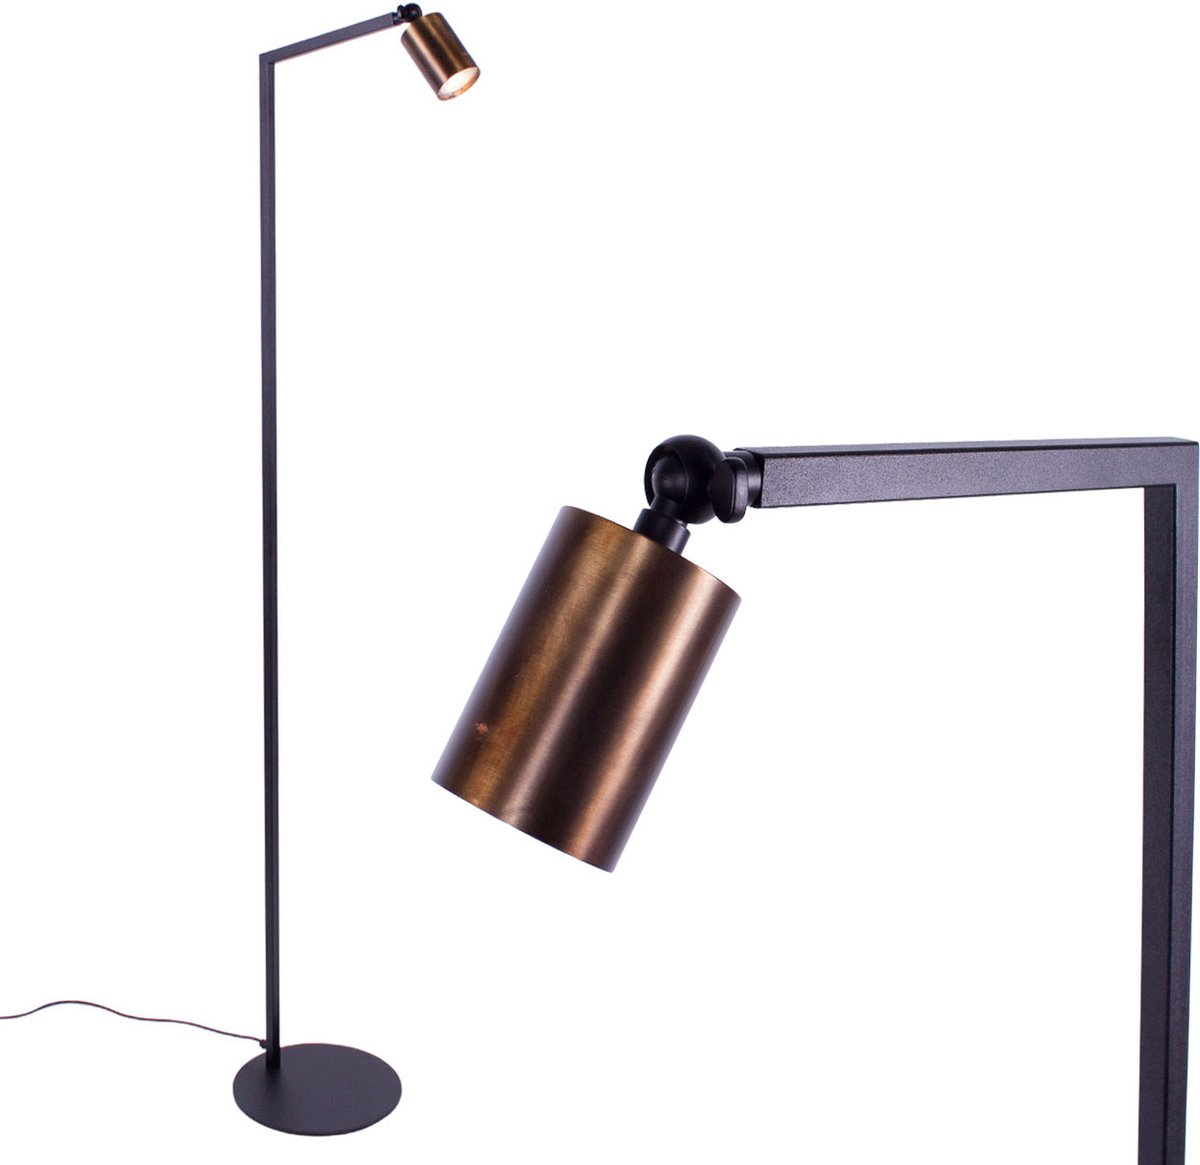 Verstelbare staande leeslamp Bounce | 1 spots | brons / bruin / zwart | metaal | 135 cm hoog | Ø 22 cm voet | staande / vloerlamp | dimbaar | modern / sfeervol design